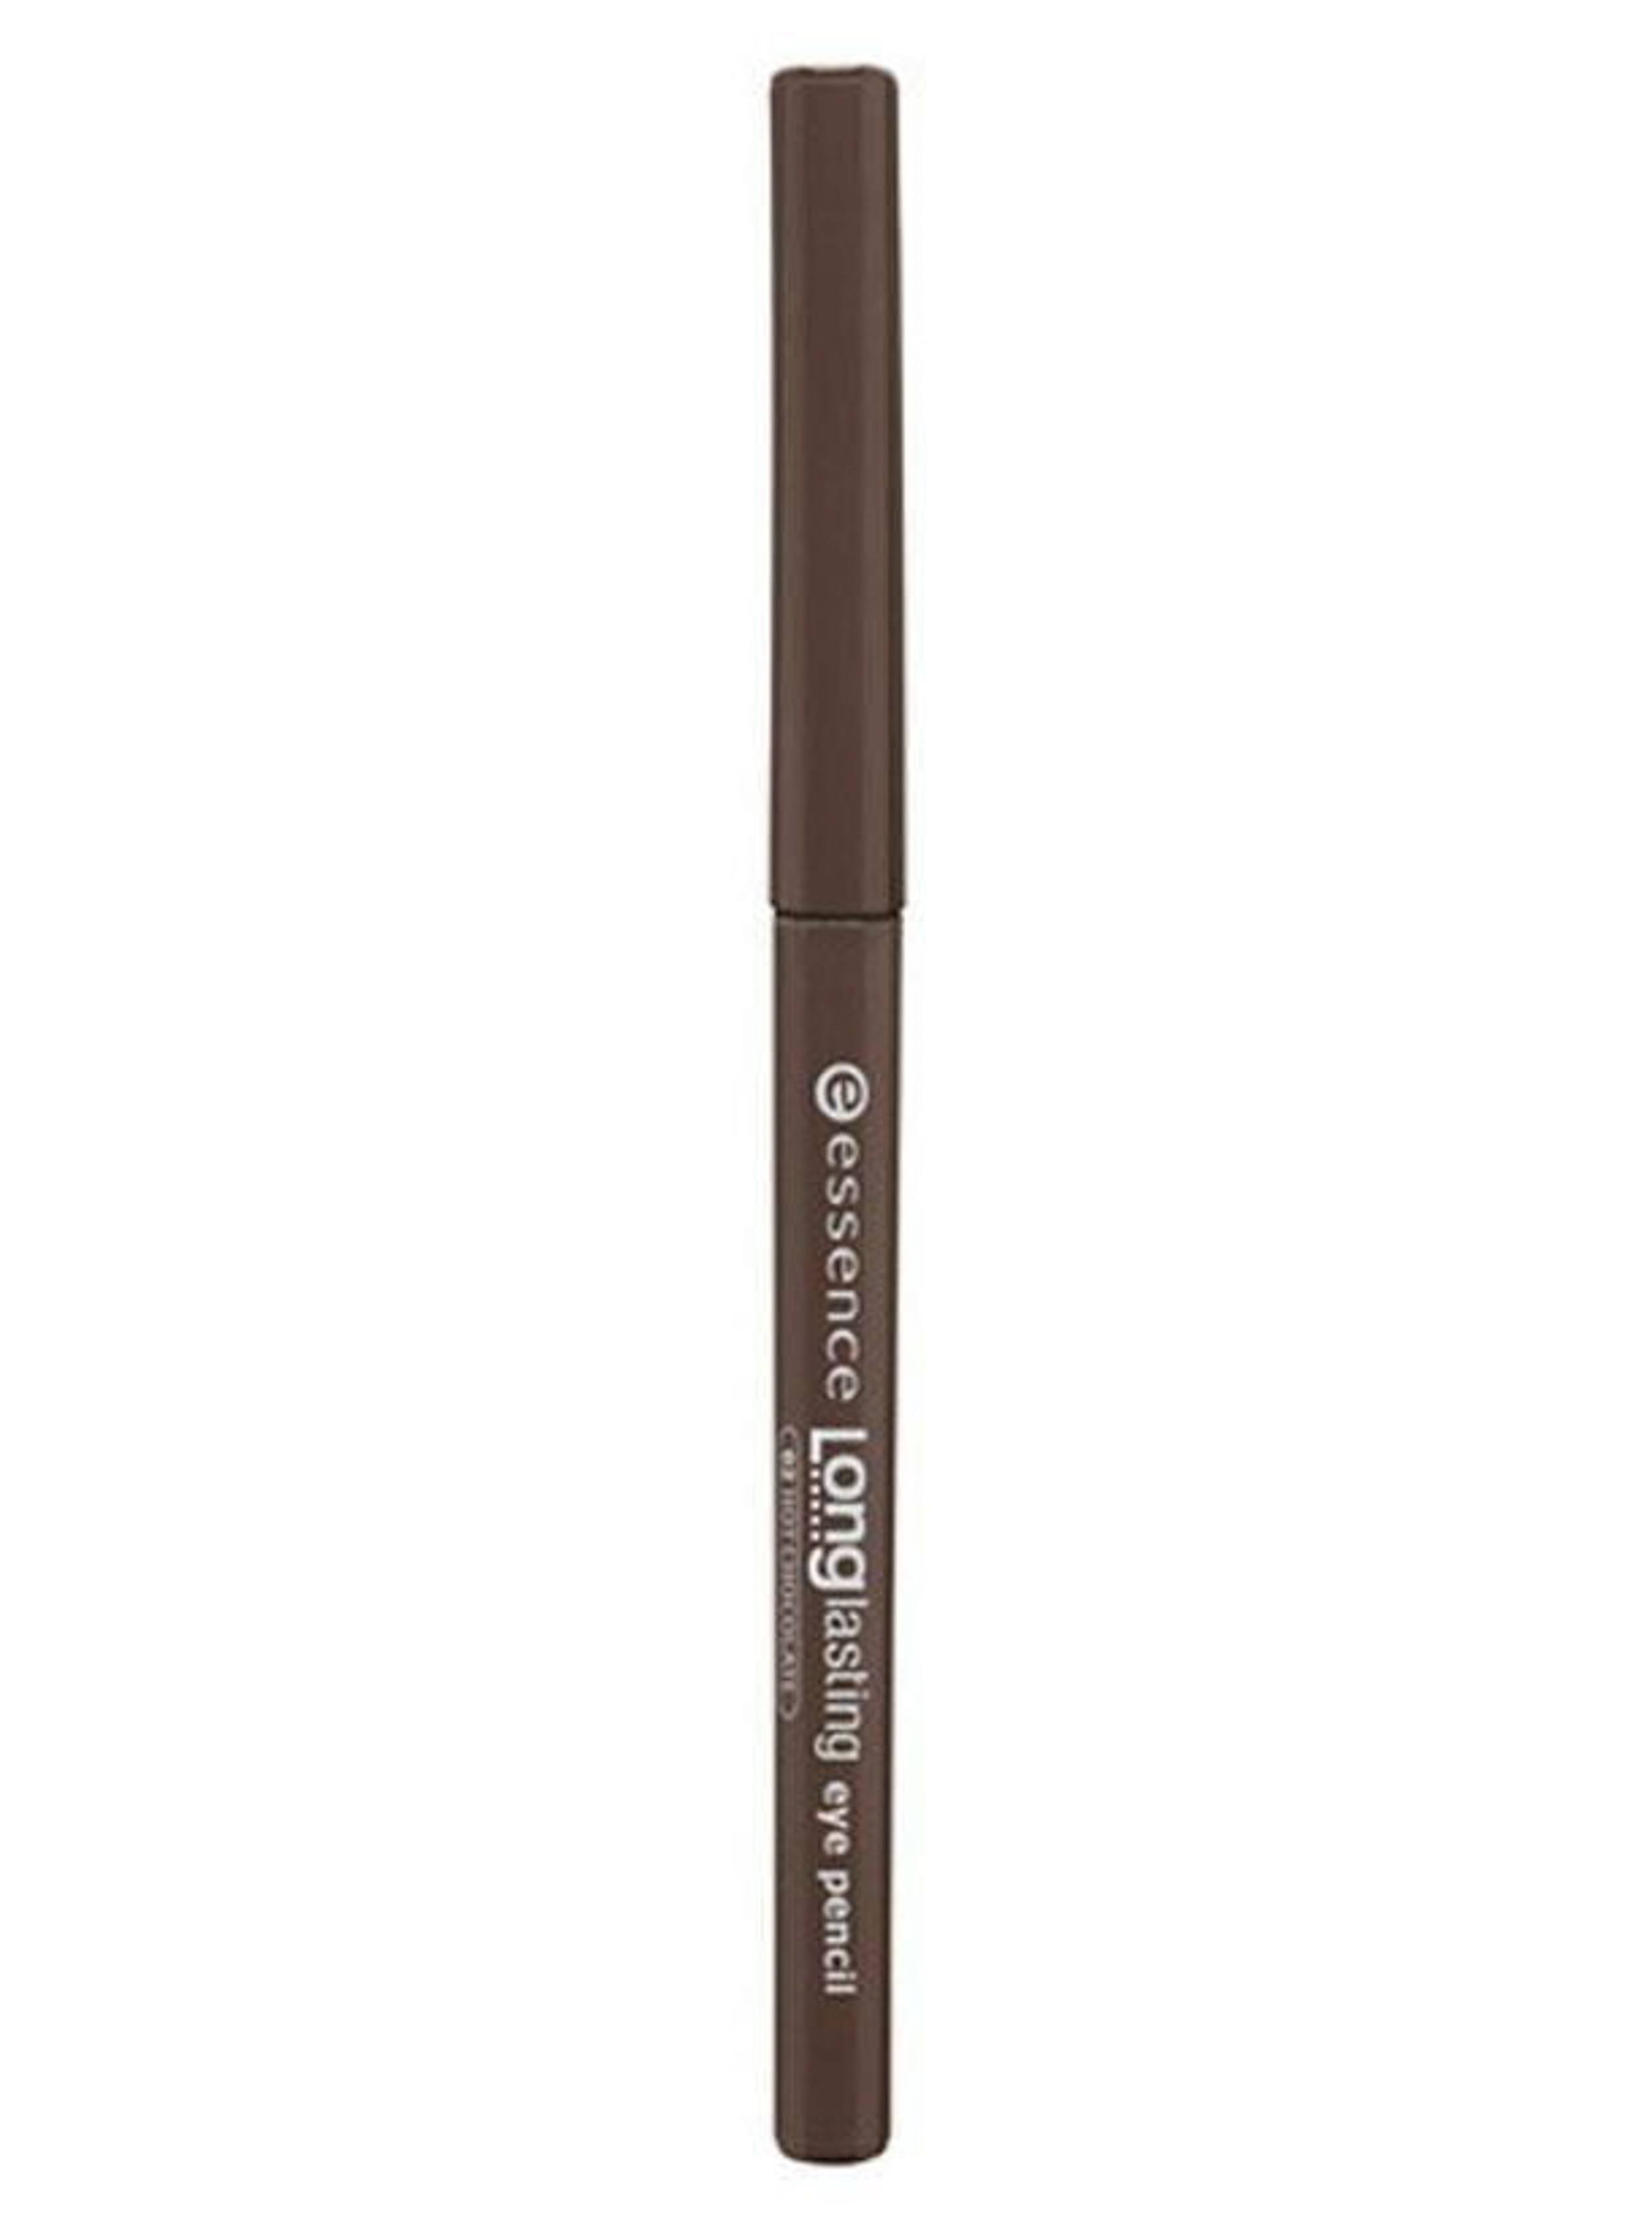 Essence Long-Lasting Eye Pencil - 02 Hot Chocolate